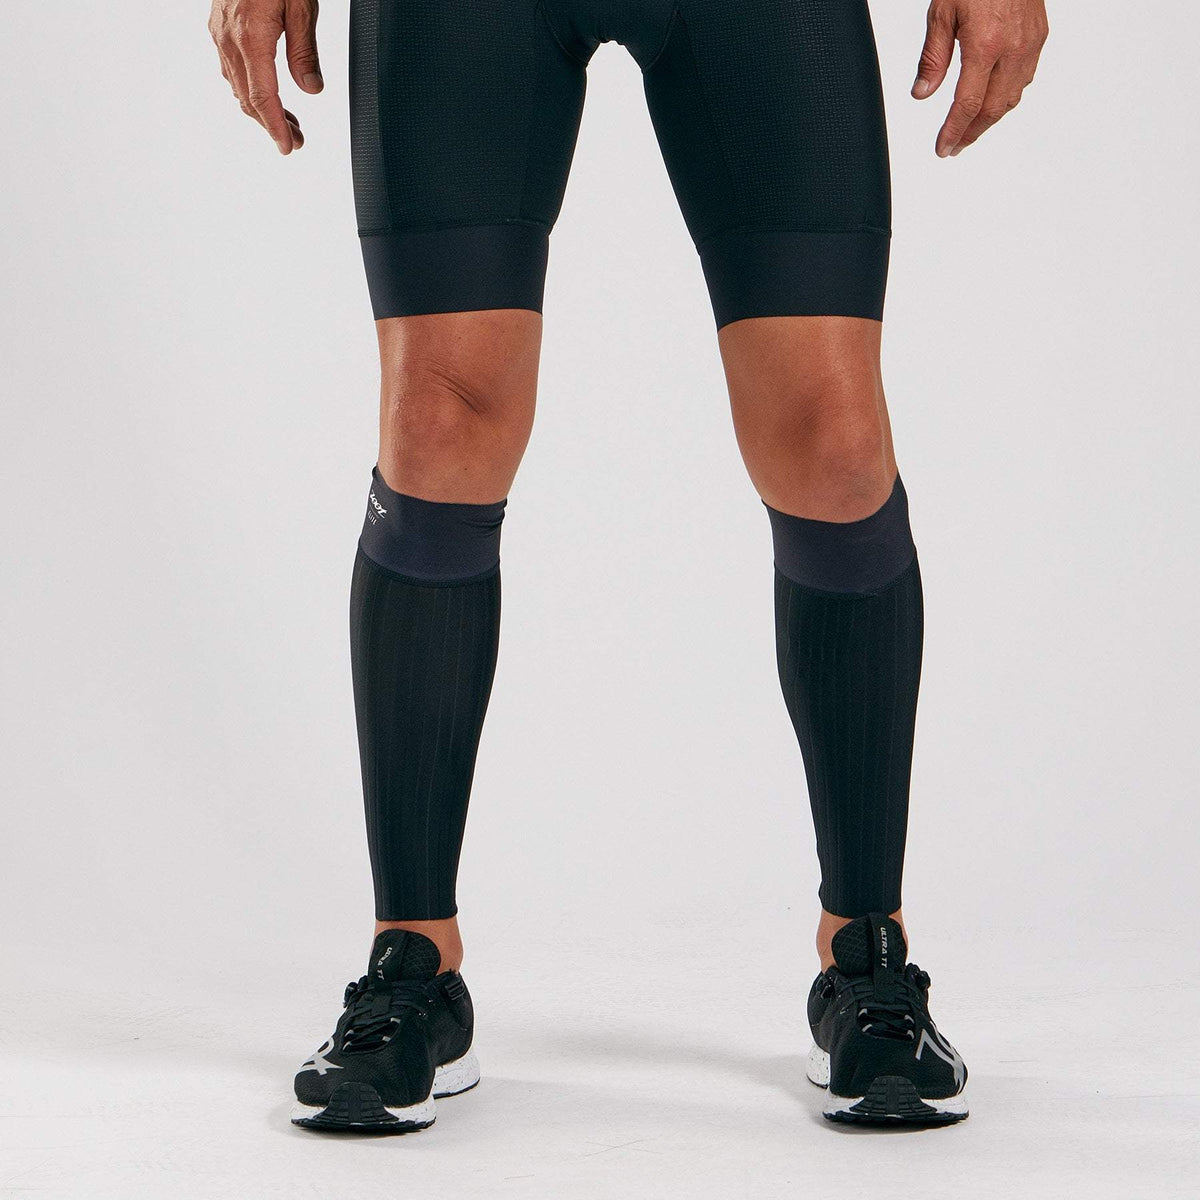 Football Leg Sleeves Men, Calf Compression Sleeve for Men Women, Leg  Sleeves for Men Football, Football Socks Running Sports Football  Accessories for